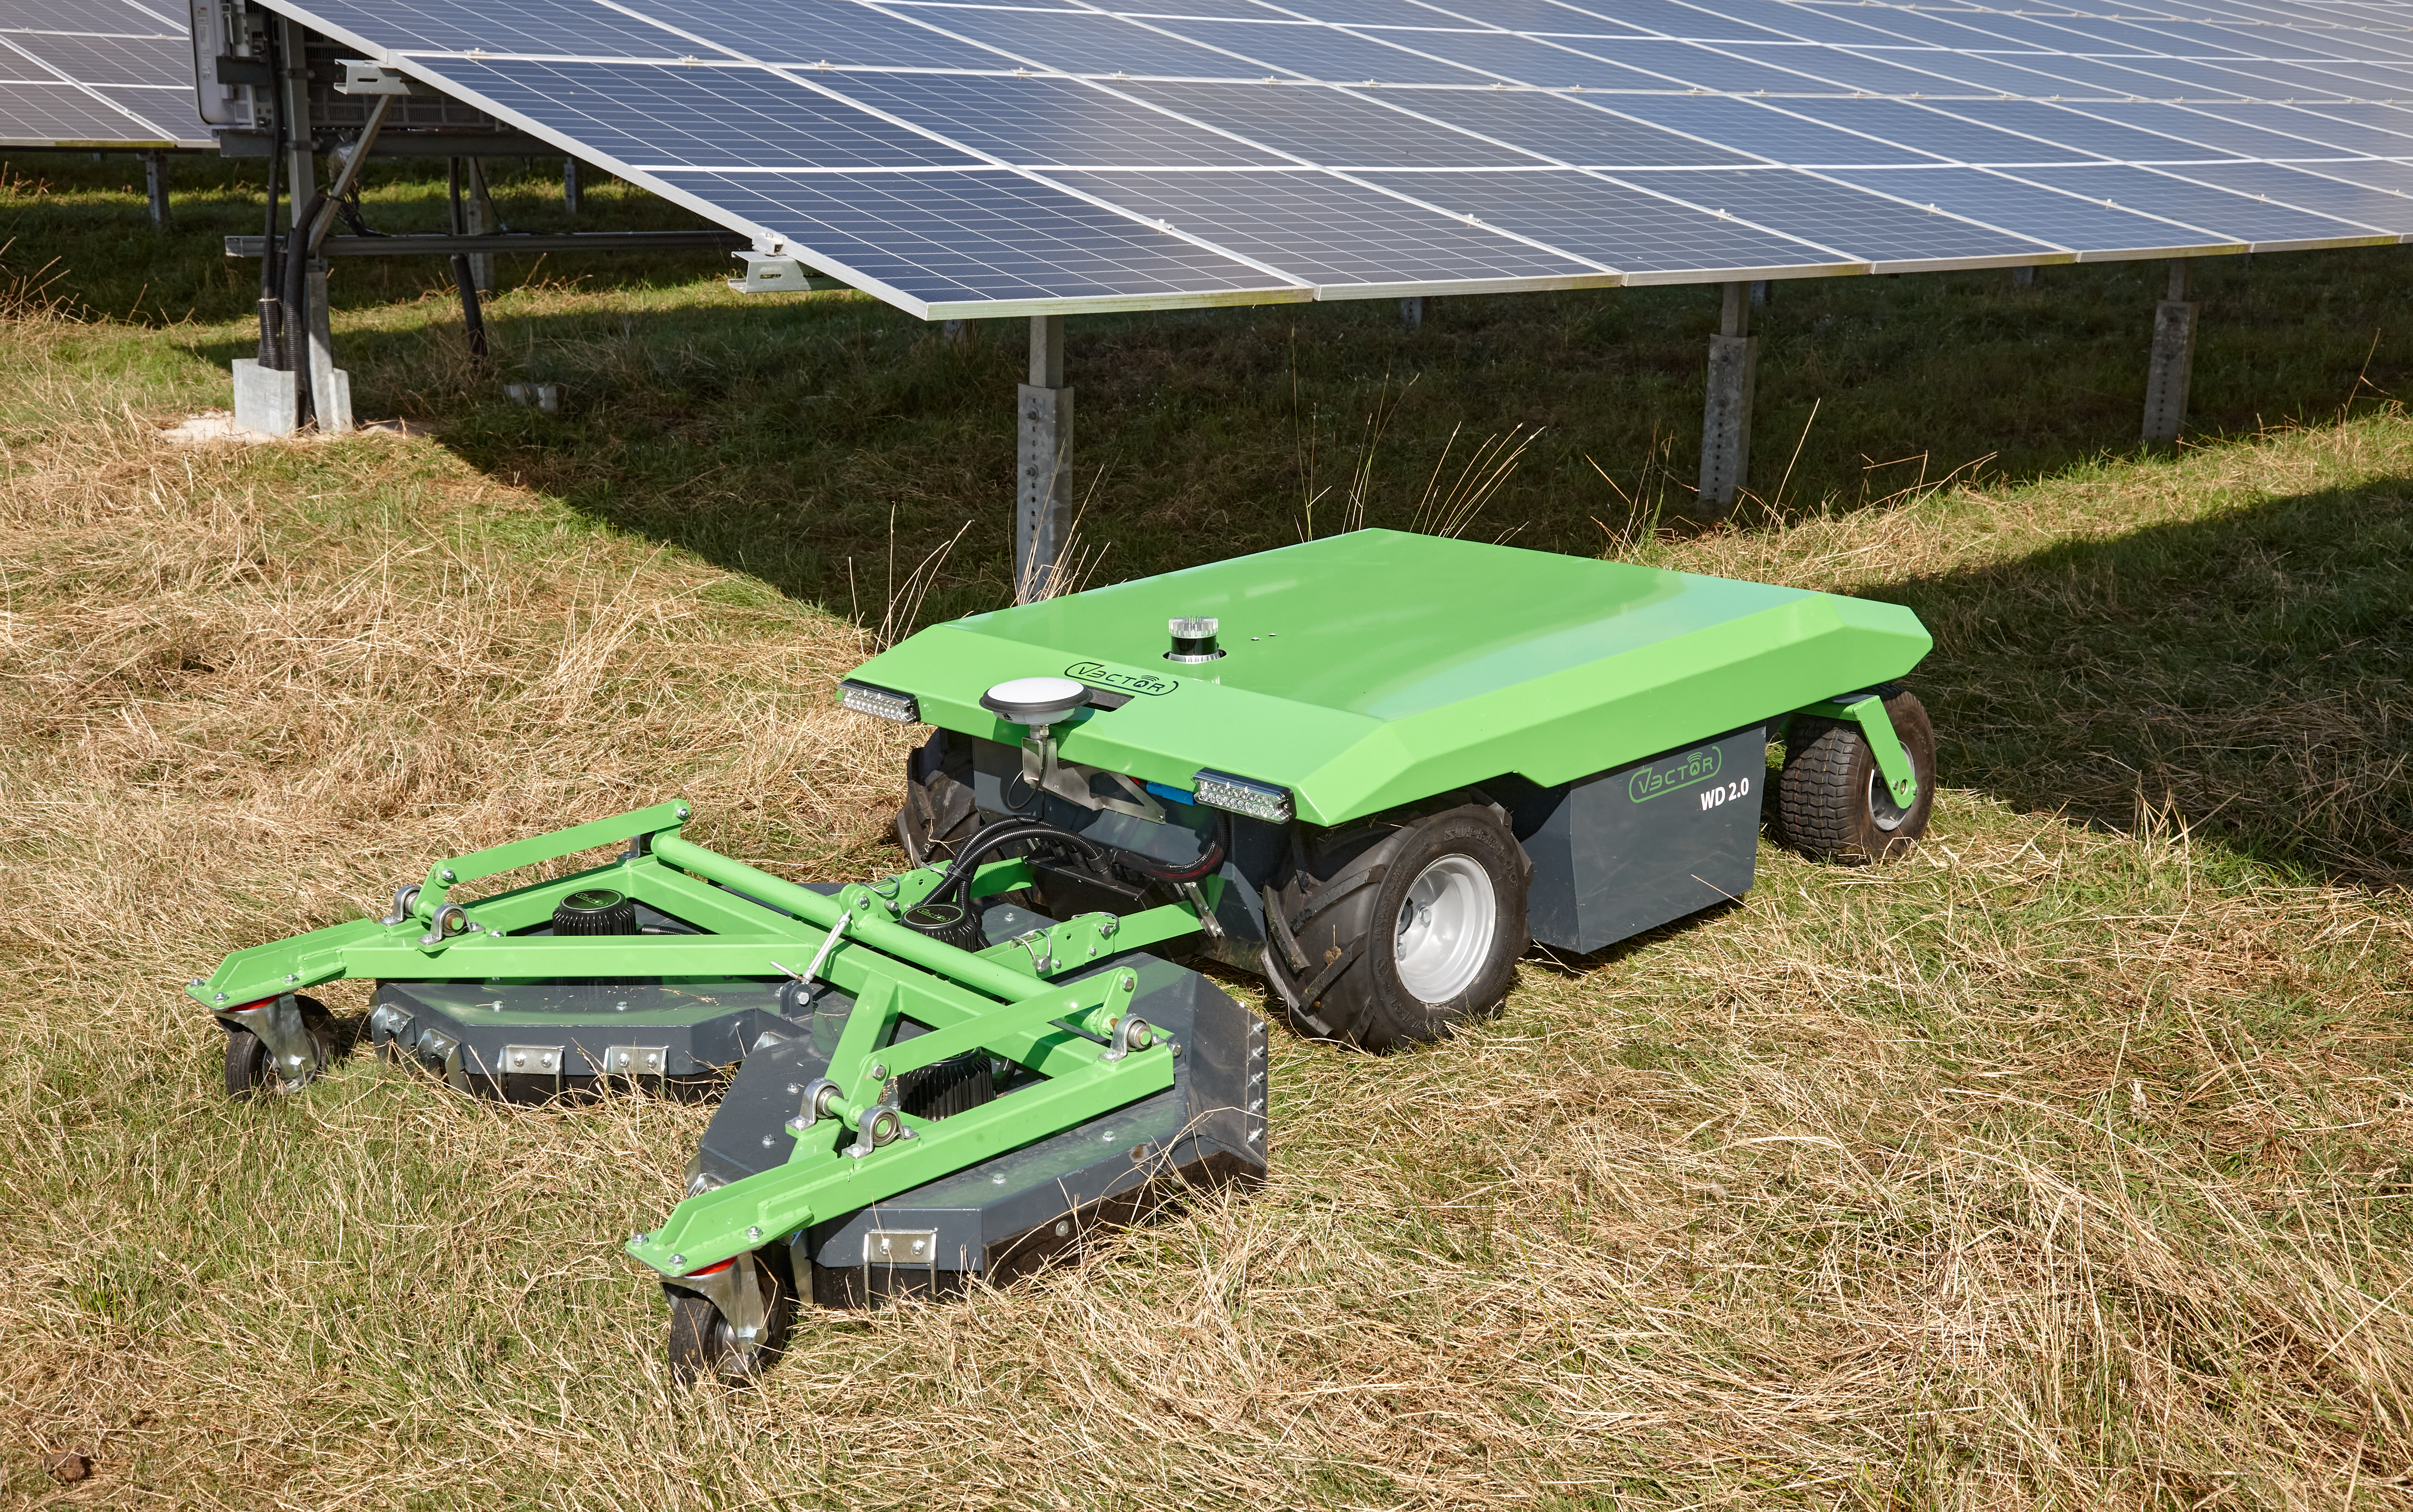 Cutting vegetation solar parks